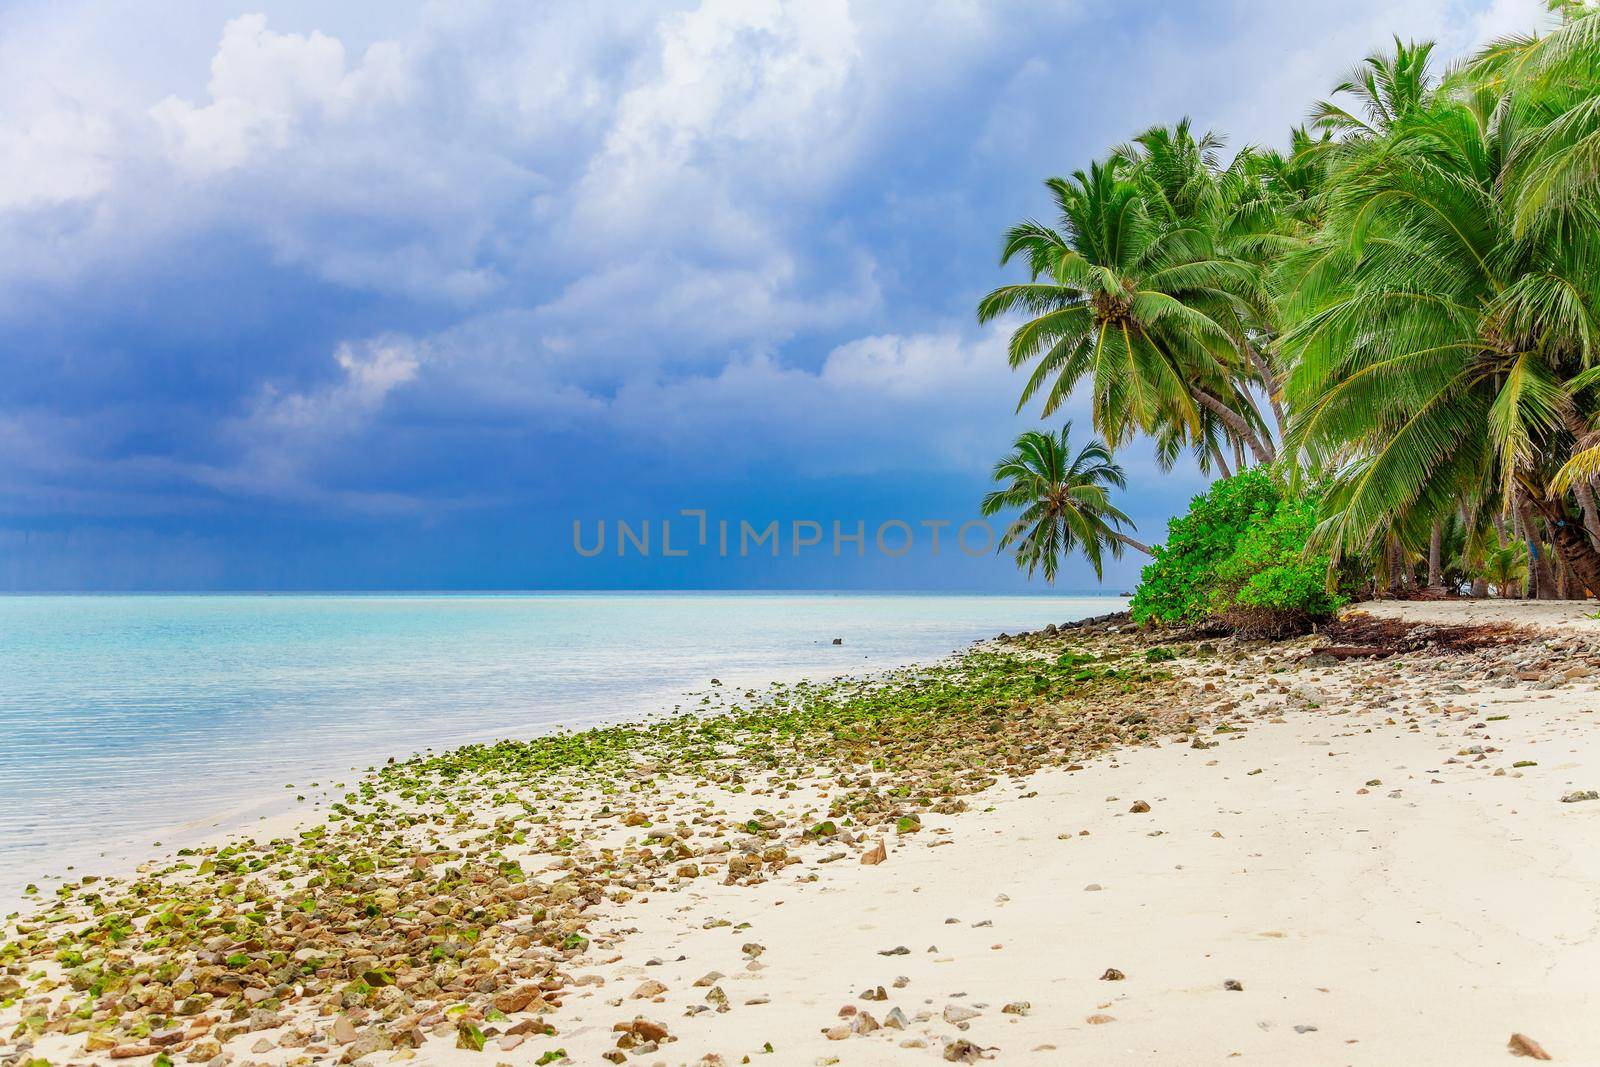 Palm, Water and Beach View on Maldive Coast by kisika